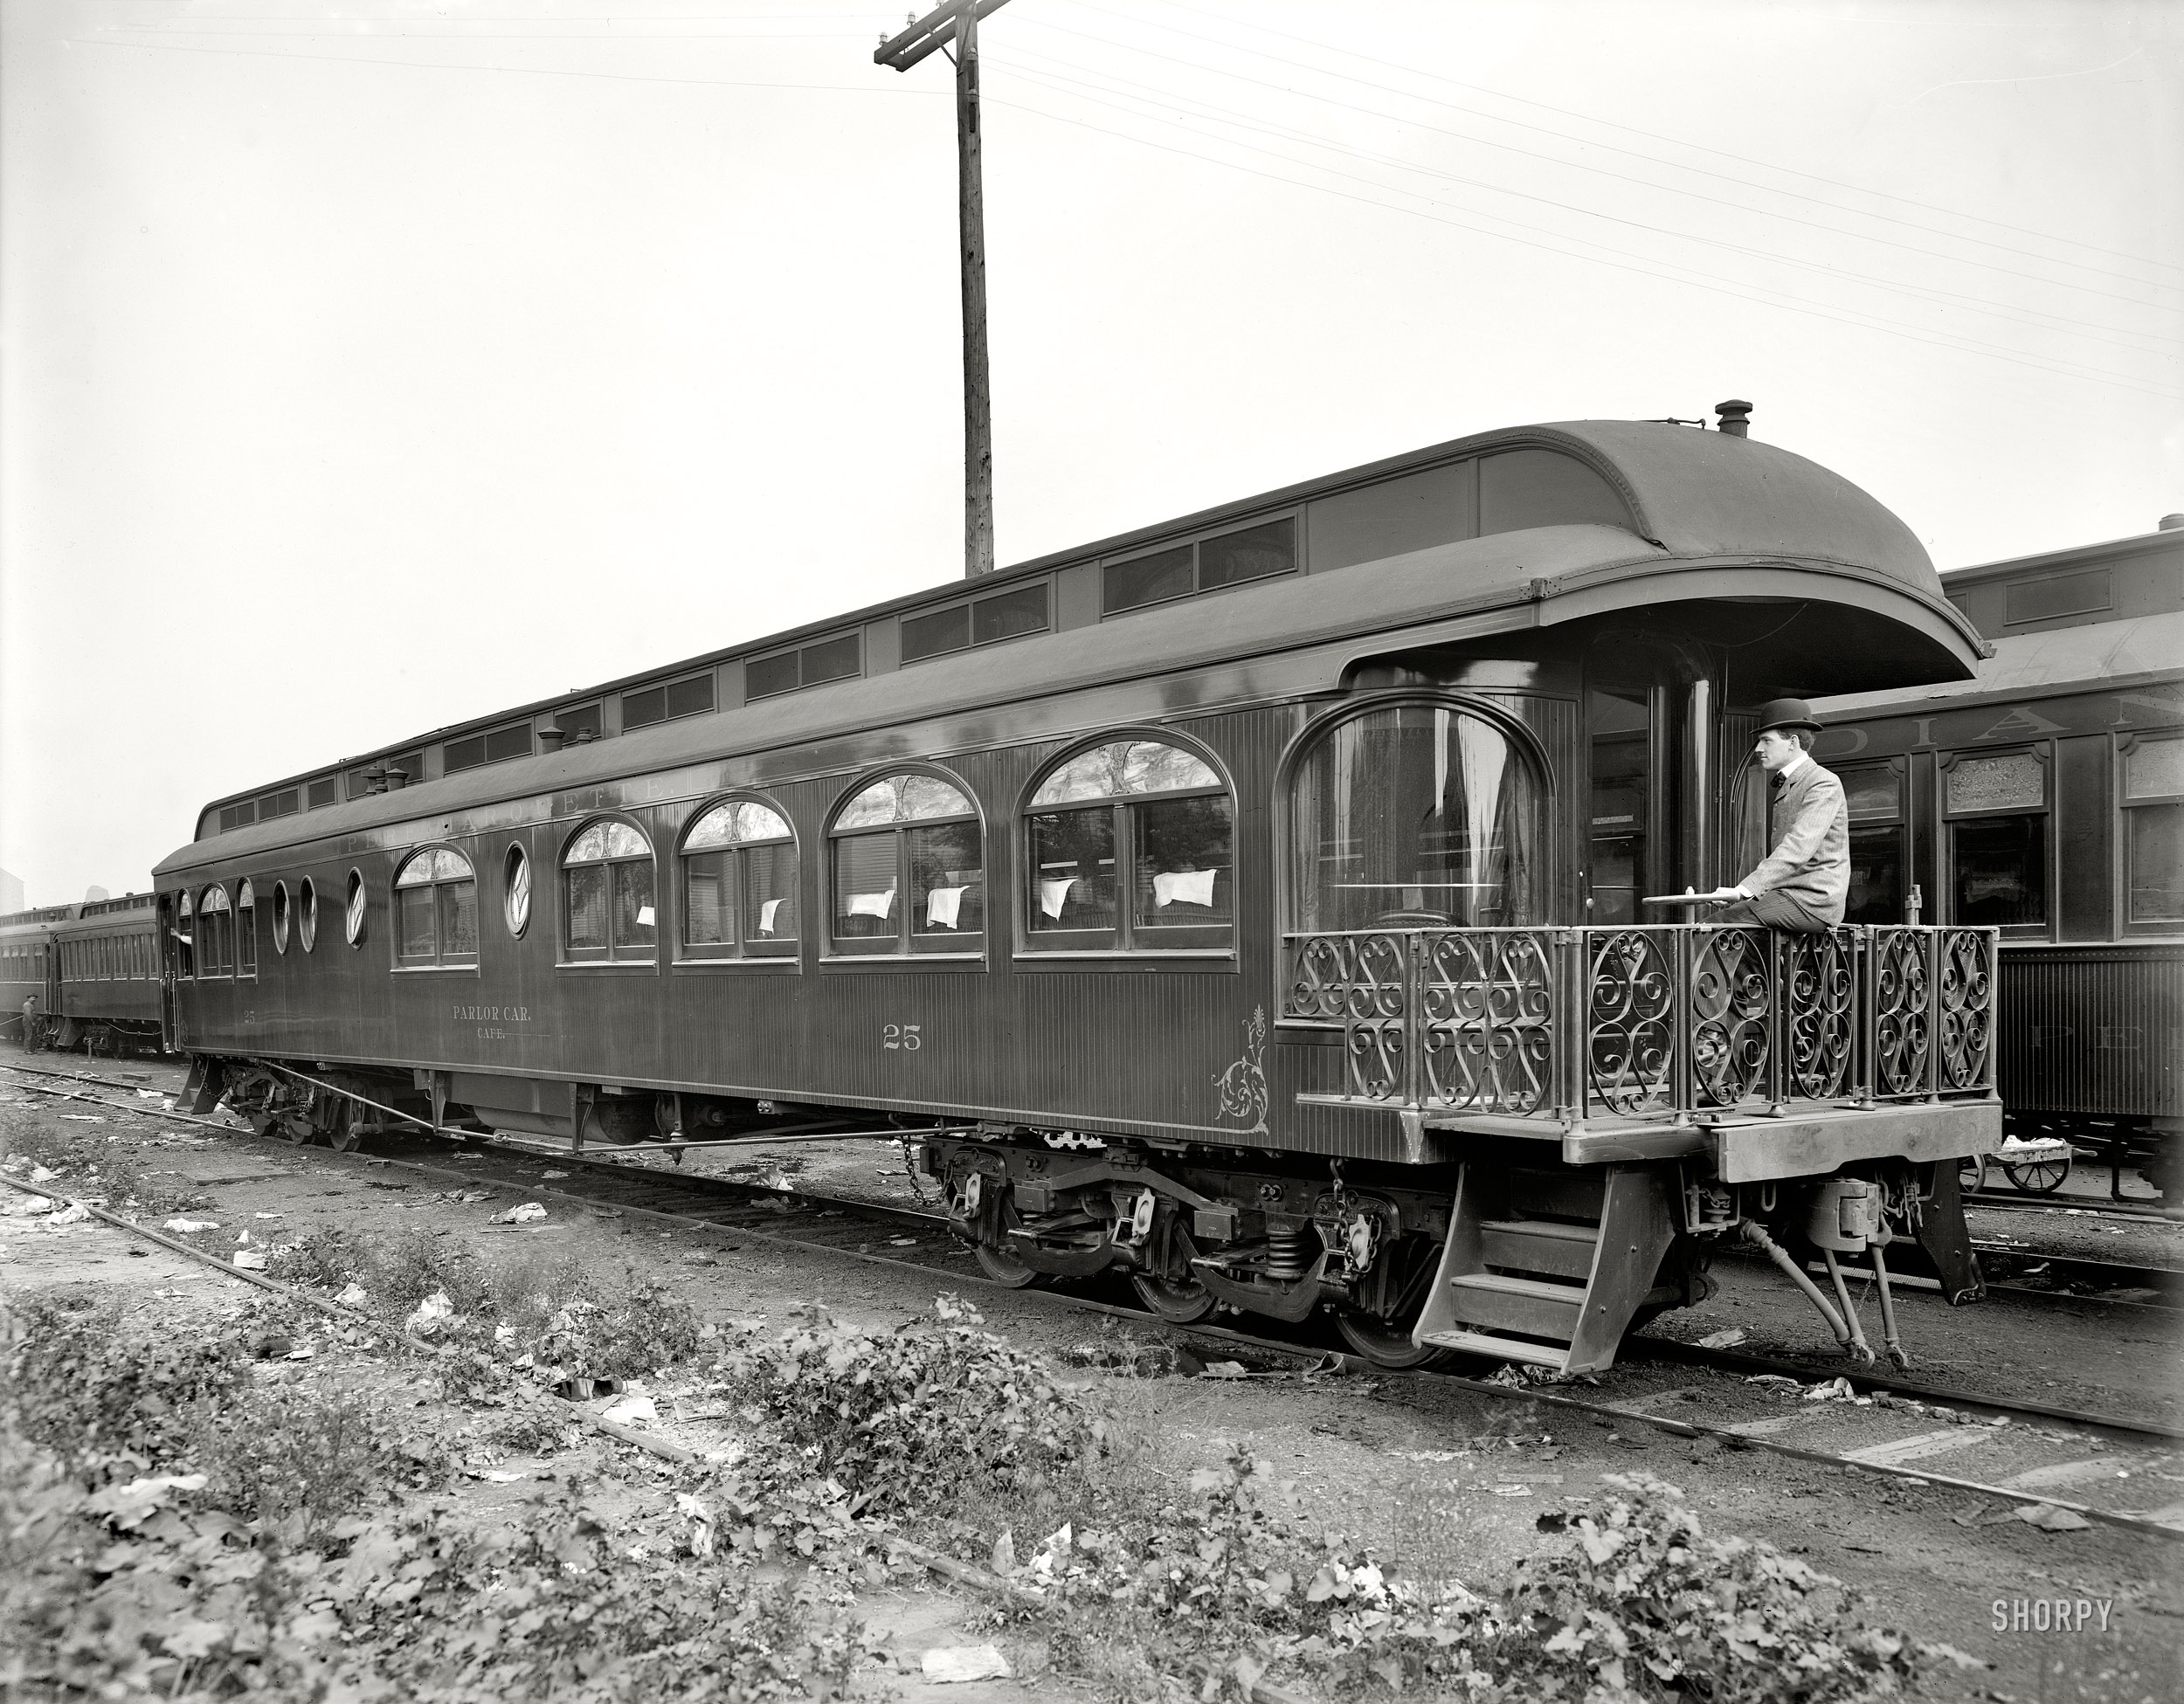 Circa 1905. "Pere Marquette Railroad parlor car No. 25, exterior." 8x10 inch dry plate glass negative, Detroit Publishing Company. View full size.